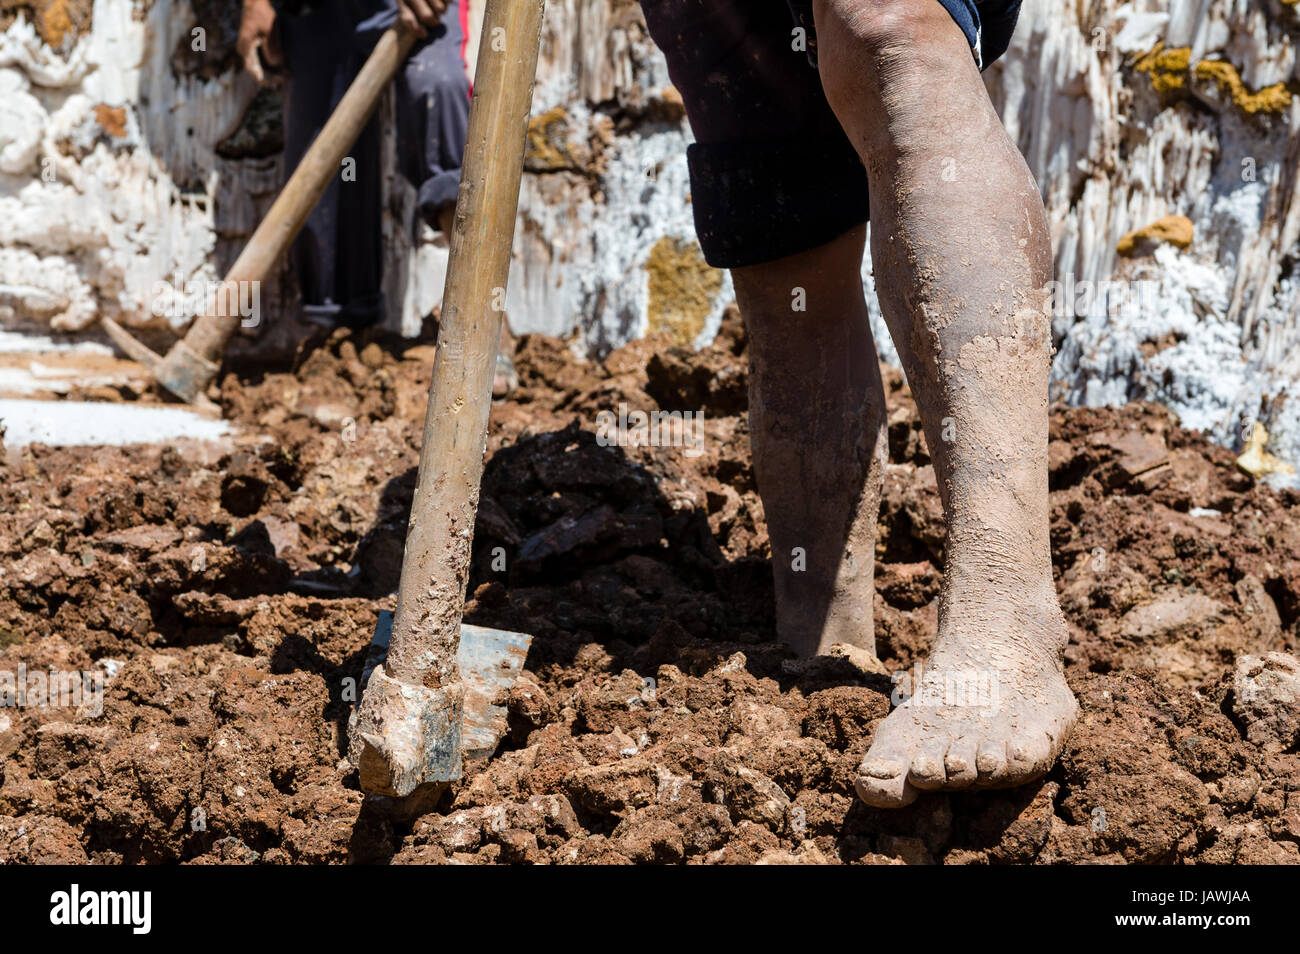 A labourer uses a spade to make salt evaporation ponds in an ancient Inca salt mine. Stock Photo